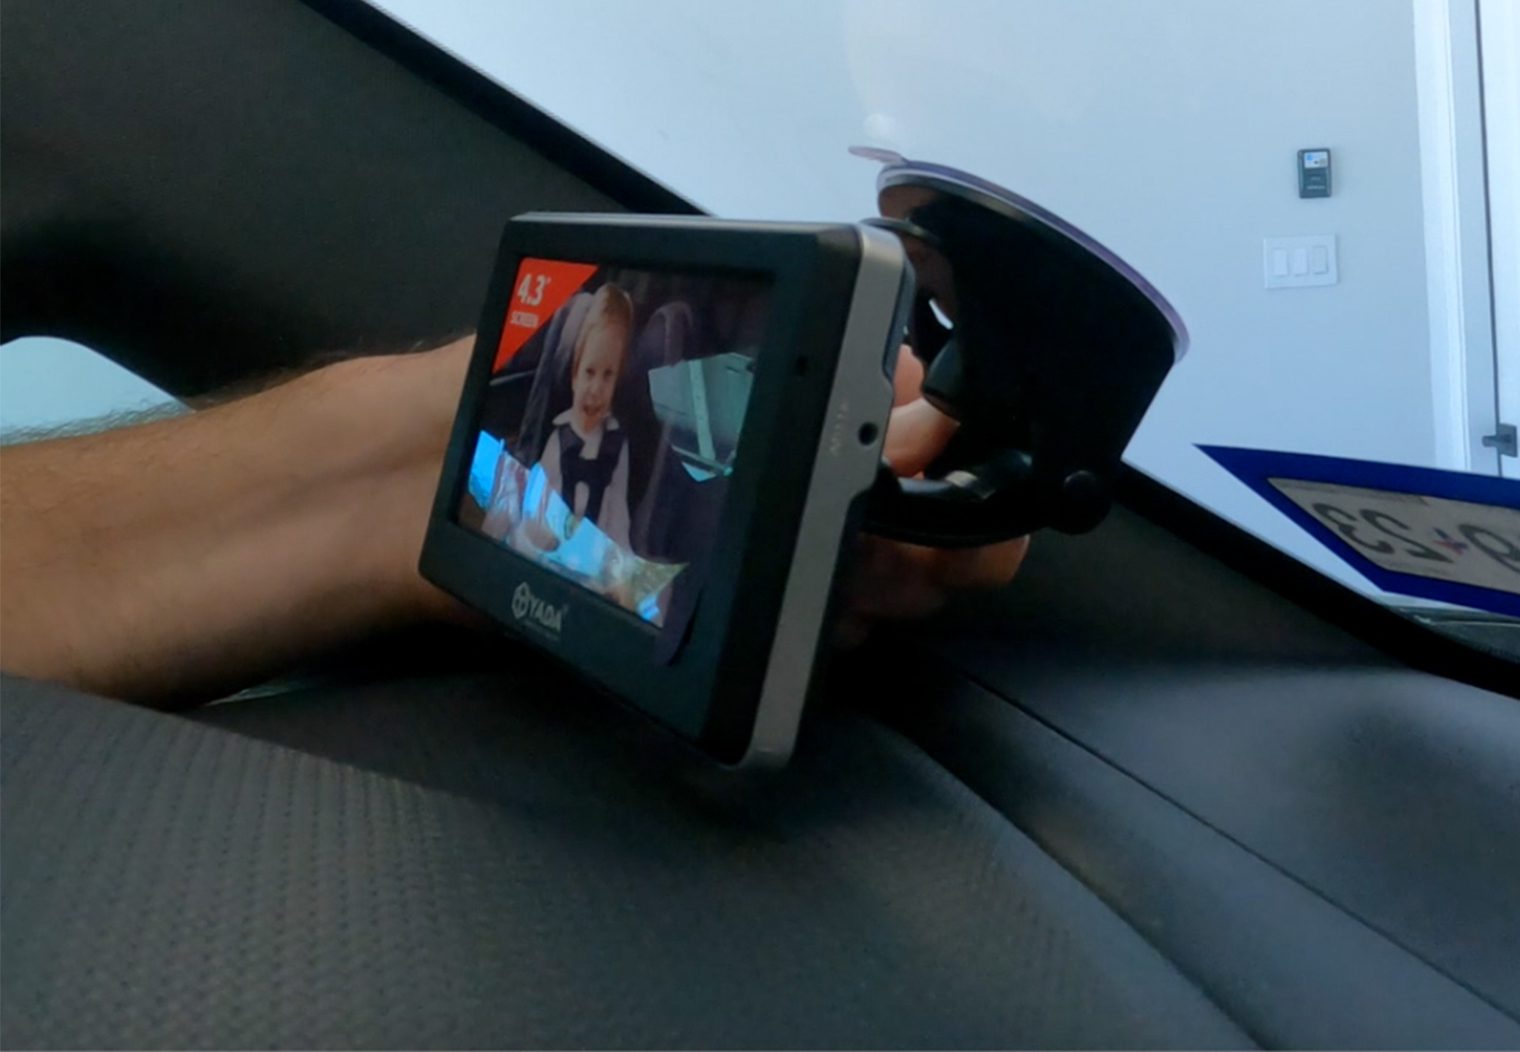 mount baby car monitor